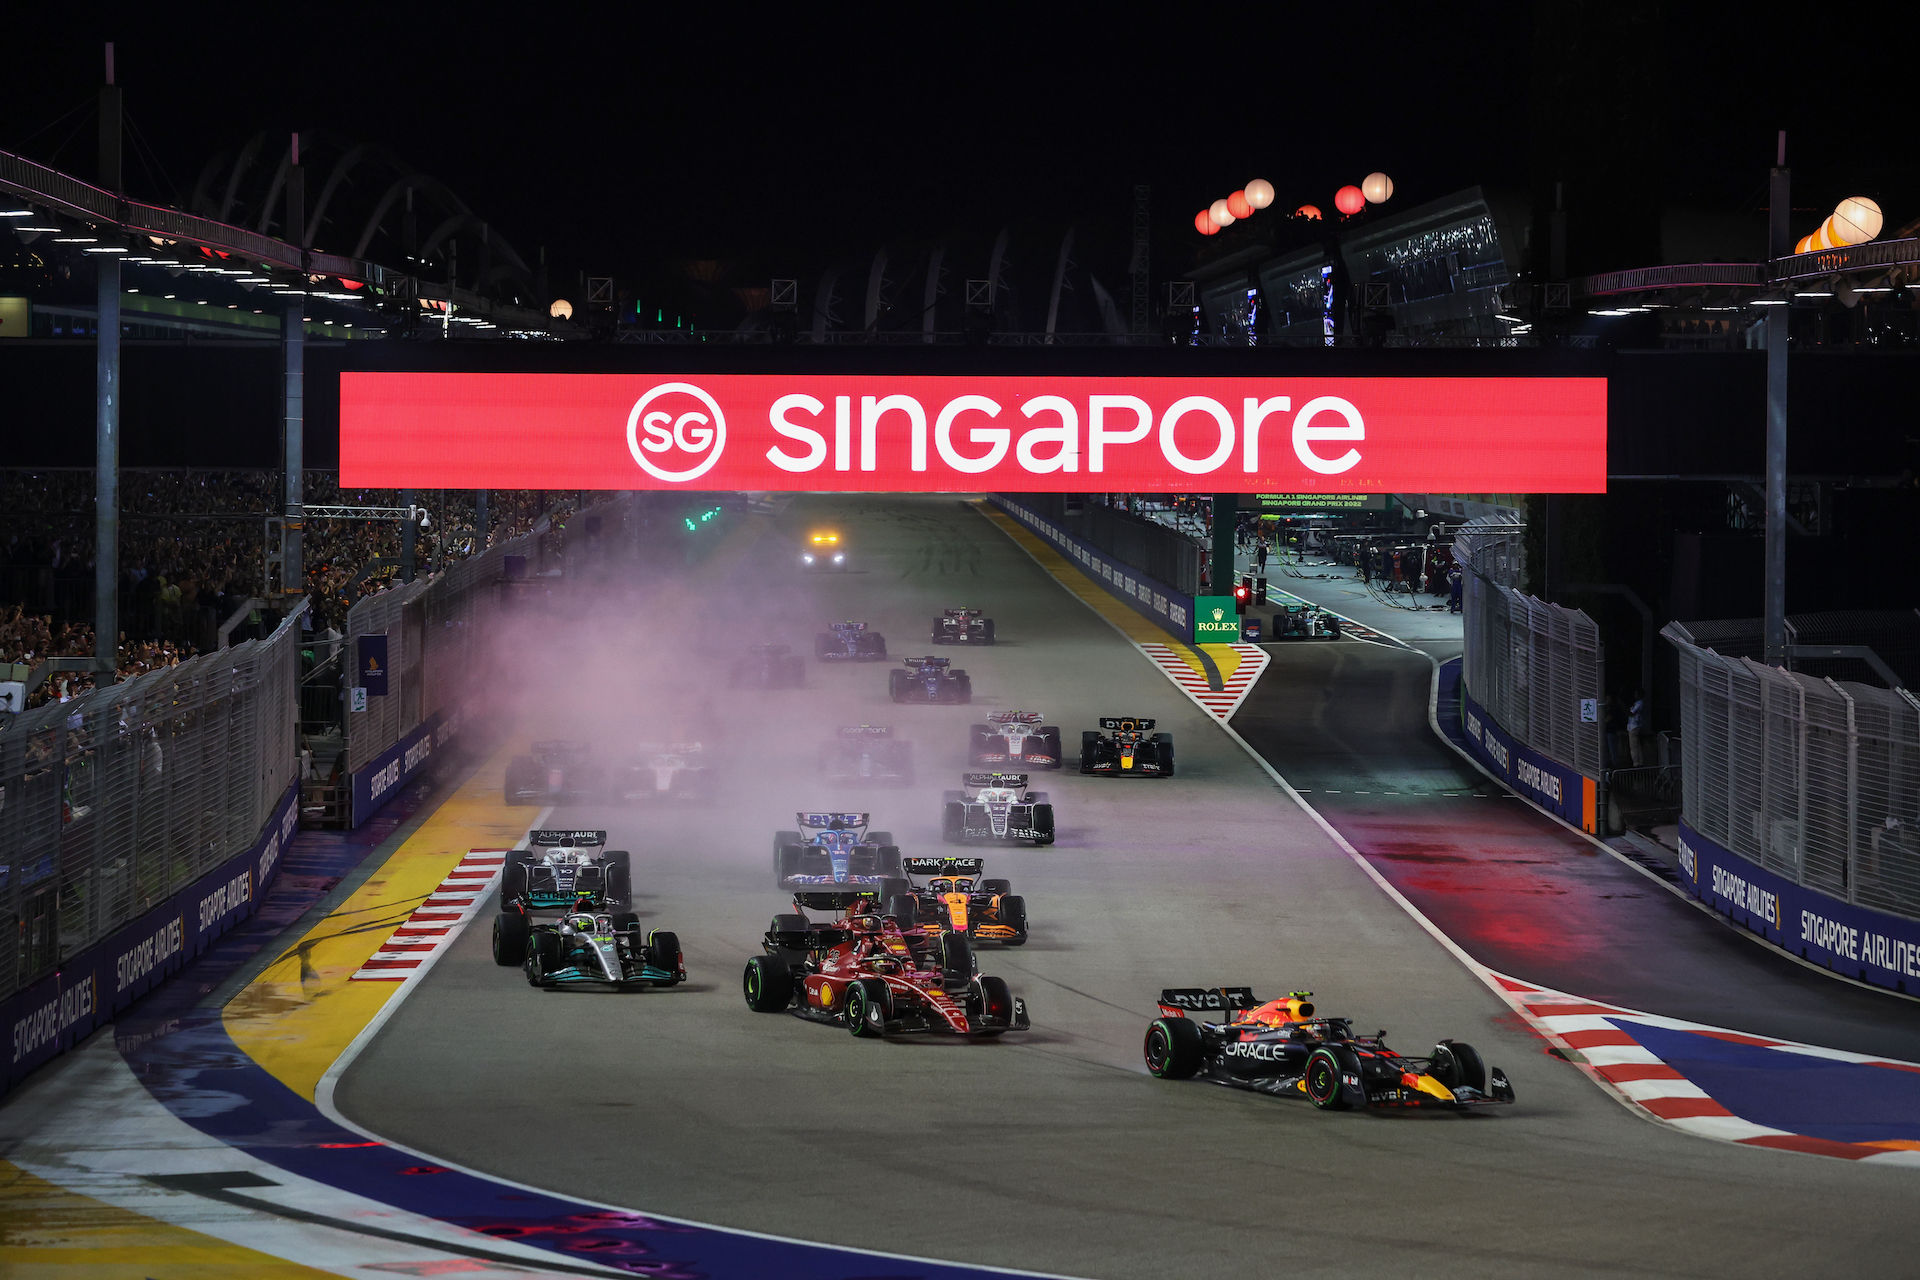 F1 Singapore: Stylish Looks From Lewis Hamilton, Lando Norris and